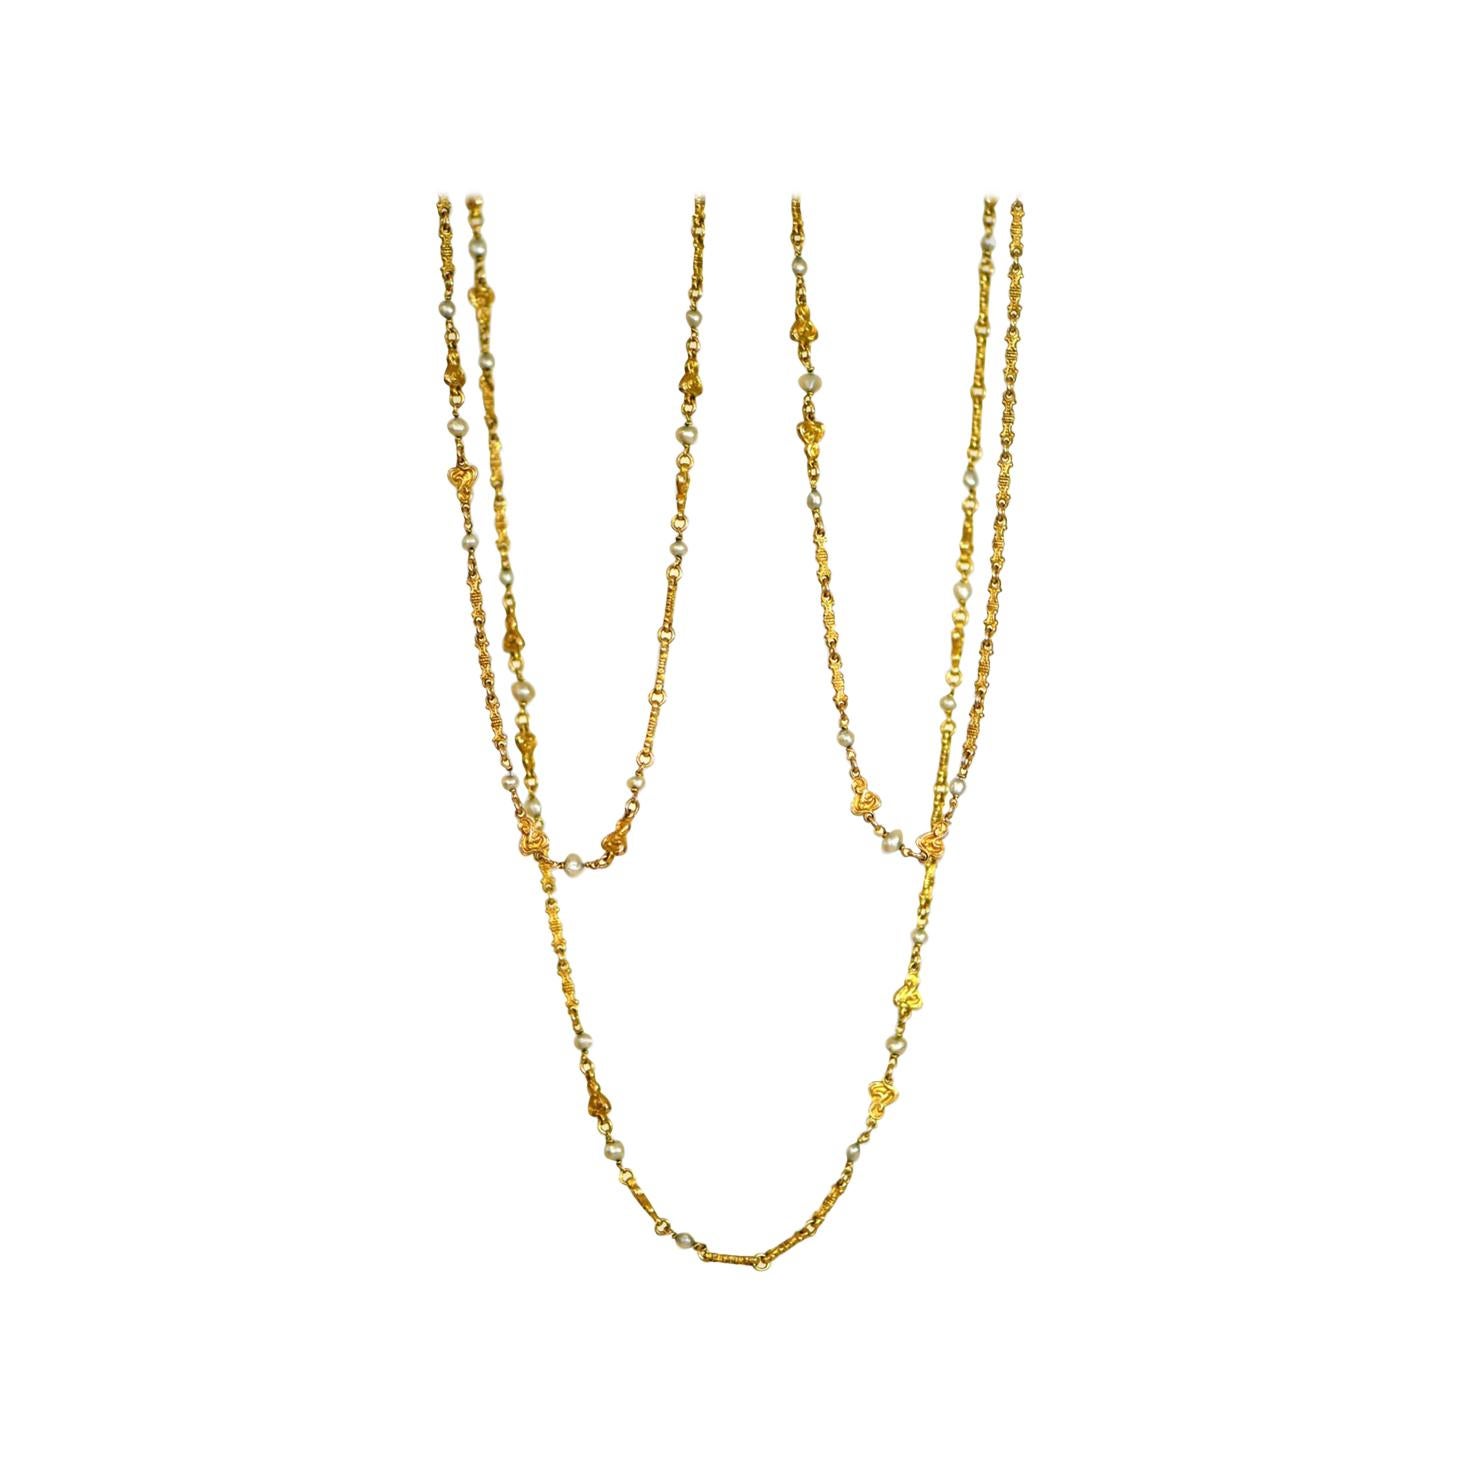 Art Nouveau French Gold Natural Pearl Long Chain, circa 1900